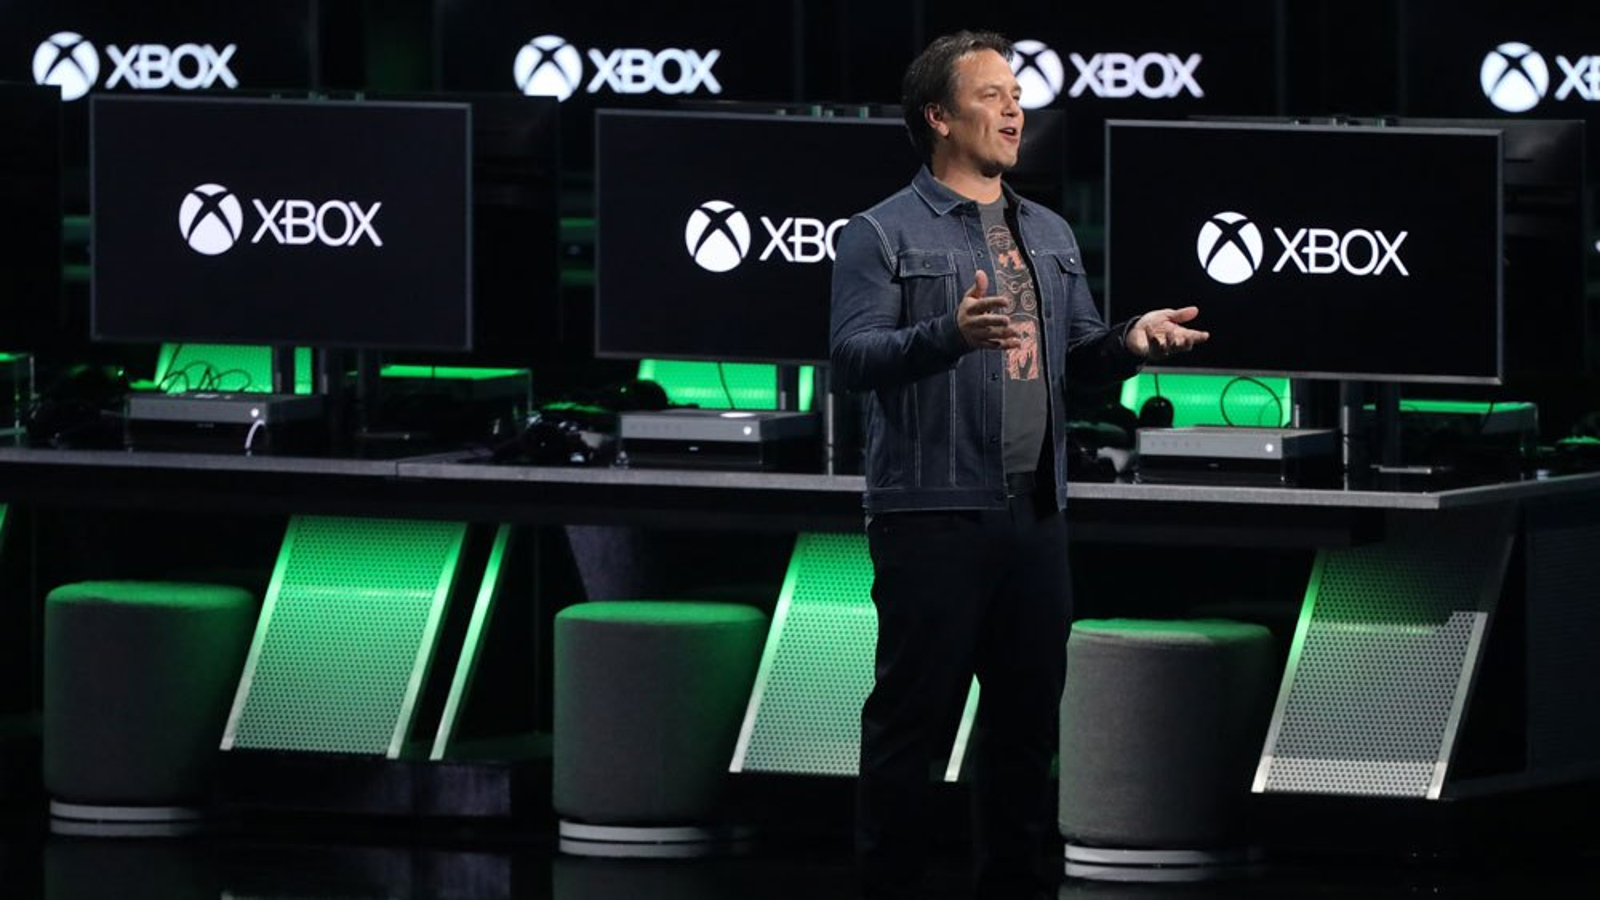 Microsoft Xbox Leaks Nintendo Acquisition Info